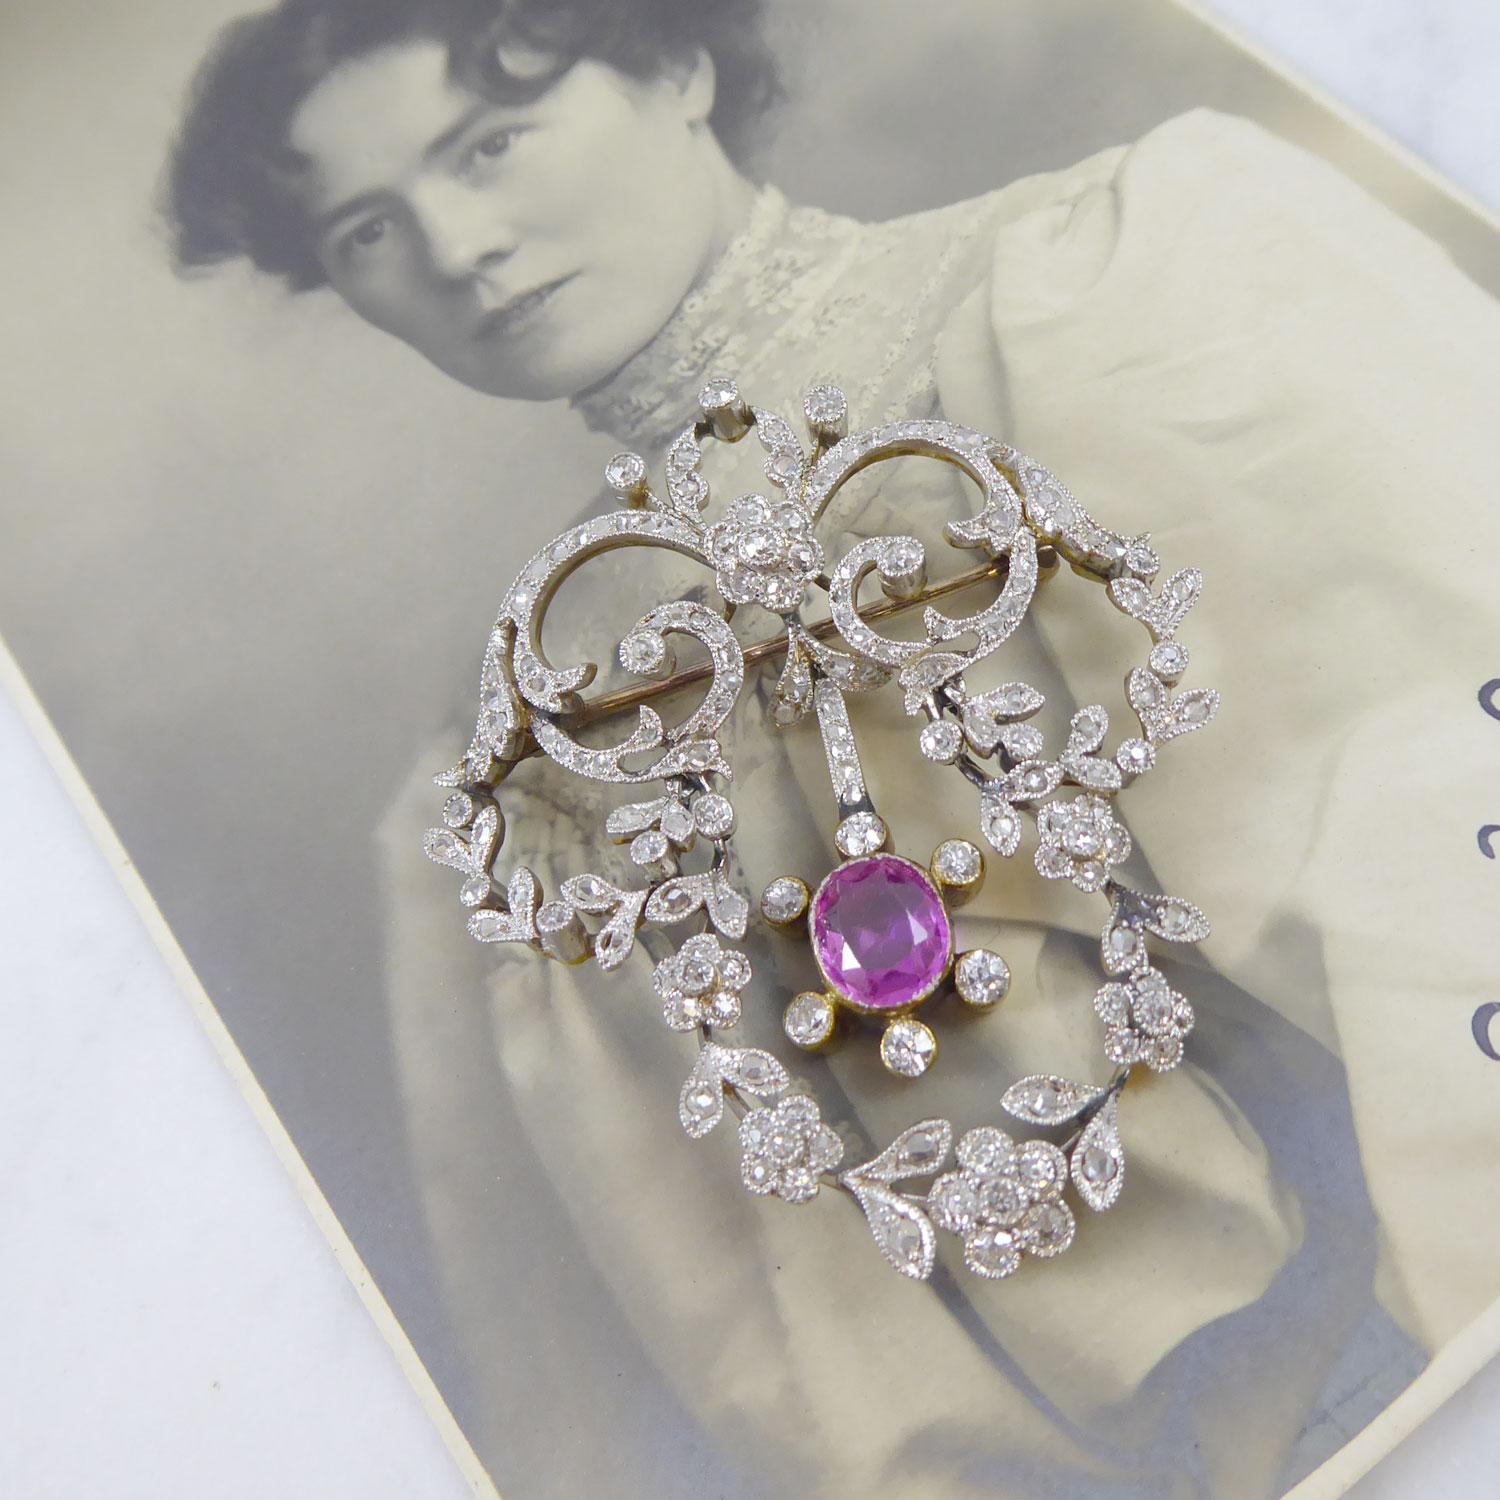 Edwardian 2.0 Carat Diamond Brooch with 1.04 Carat Pink Sapphire, circa 1900s 3